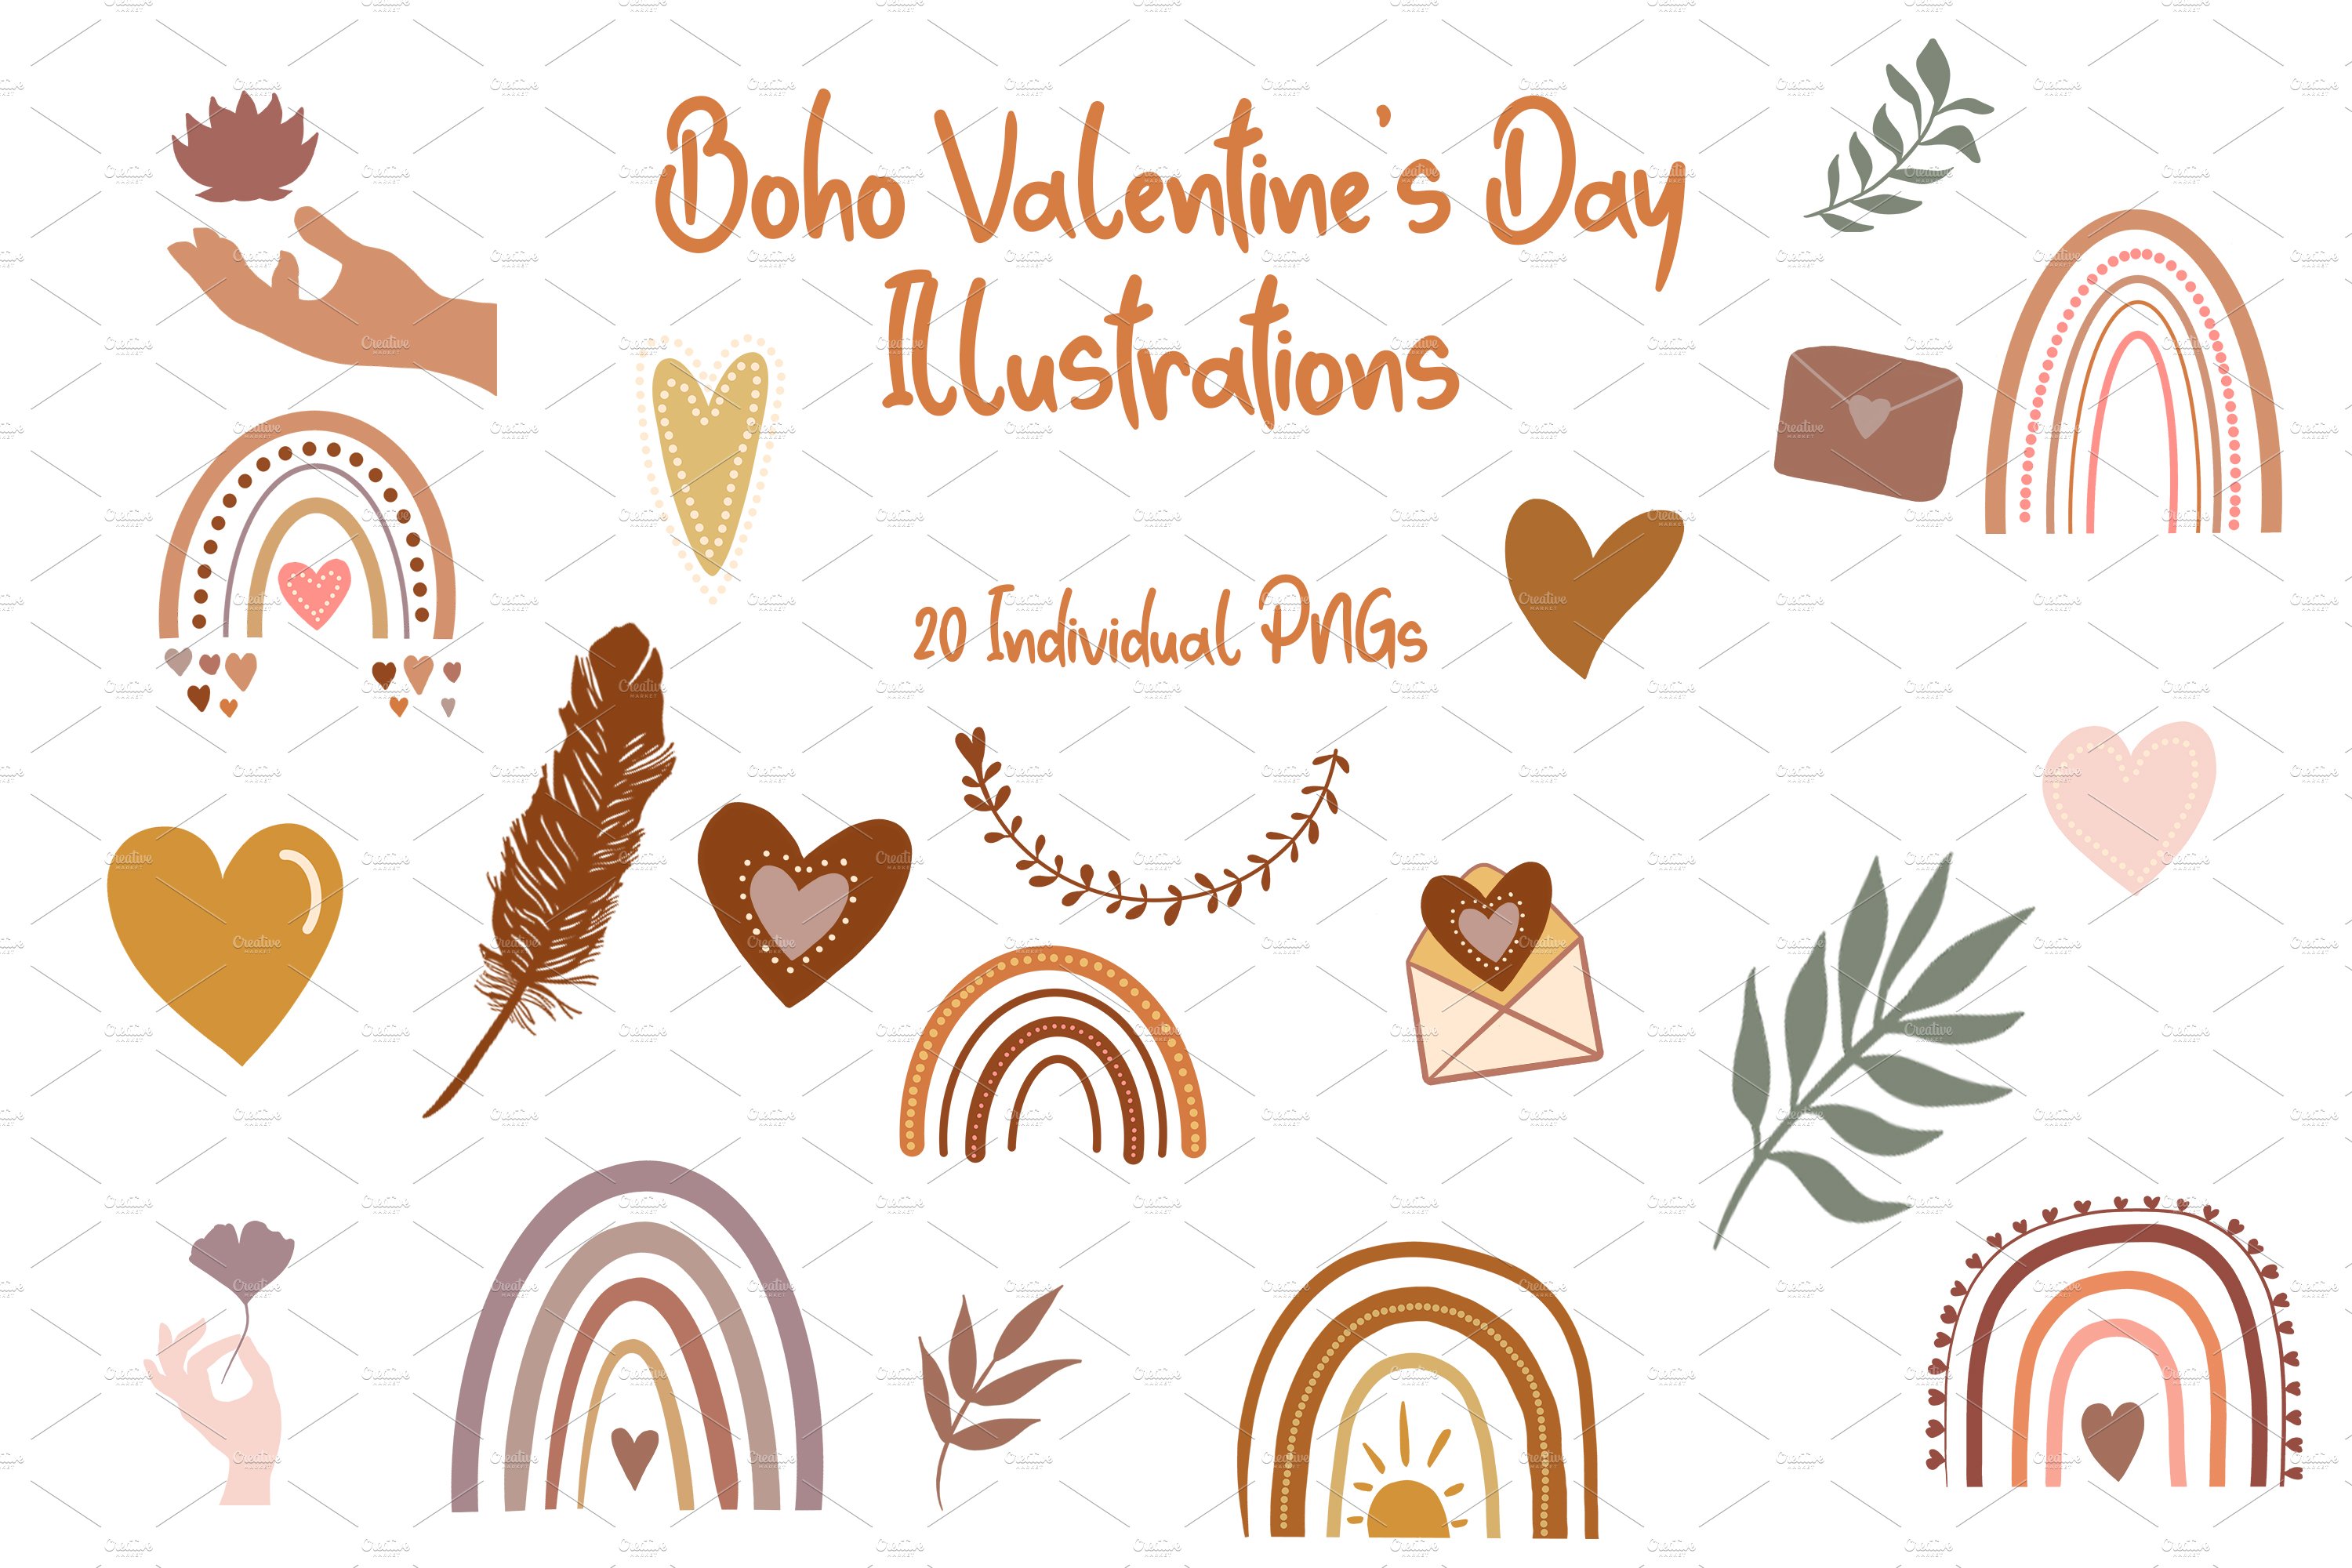 Boho Valentine's Day Illustrations cover image.